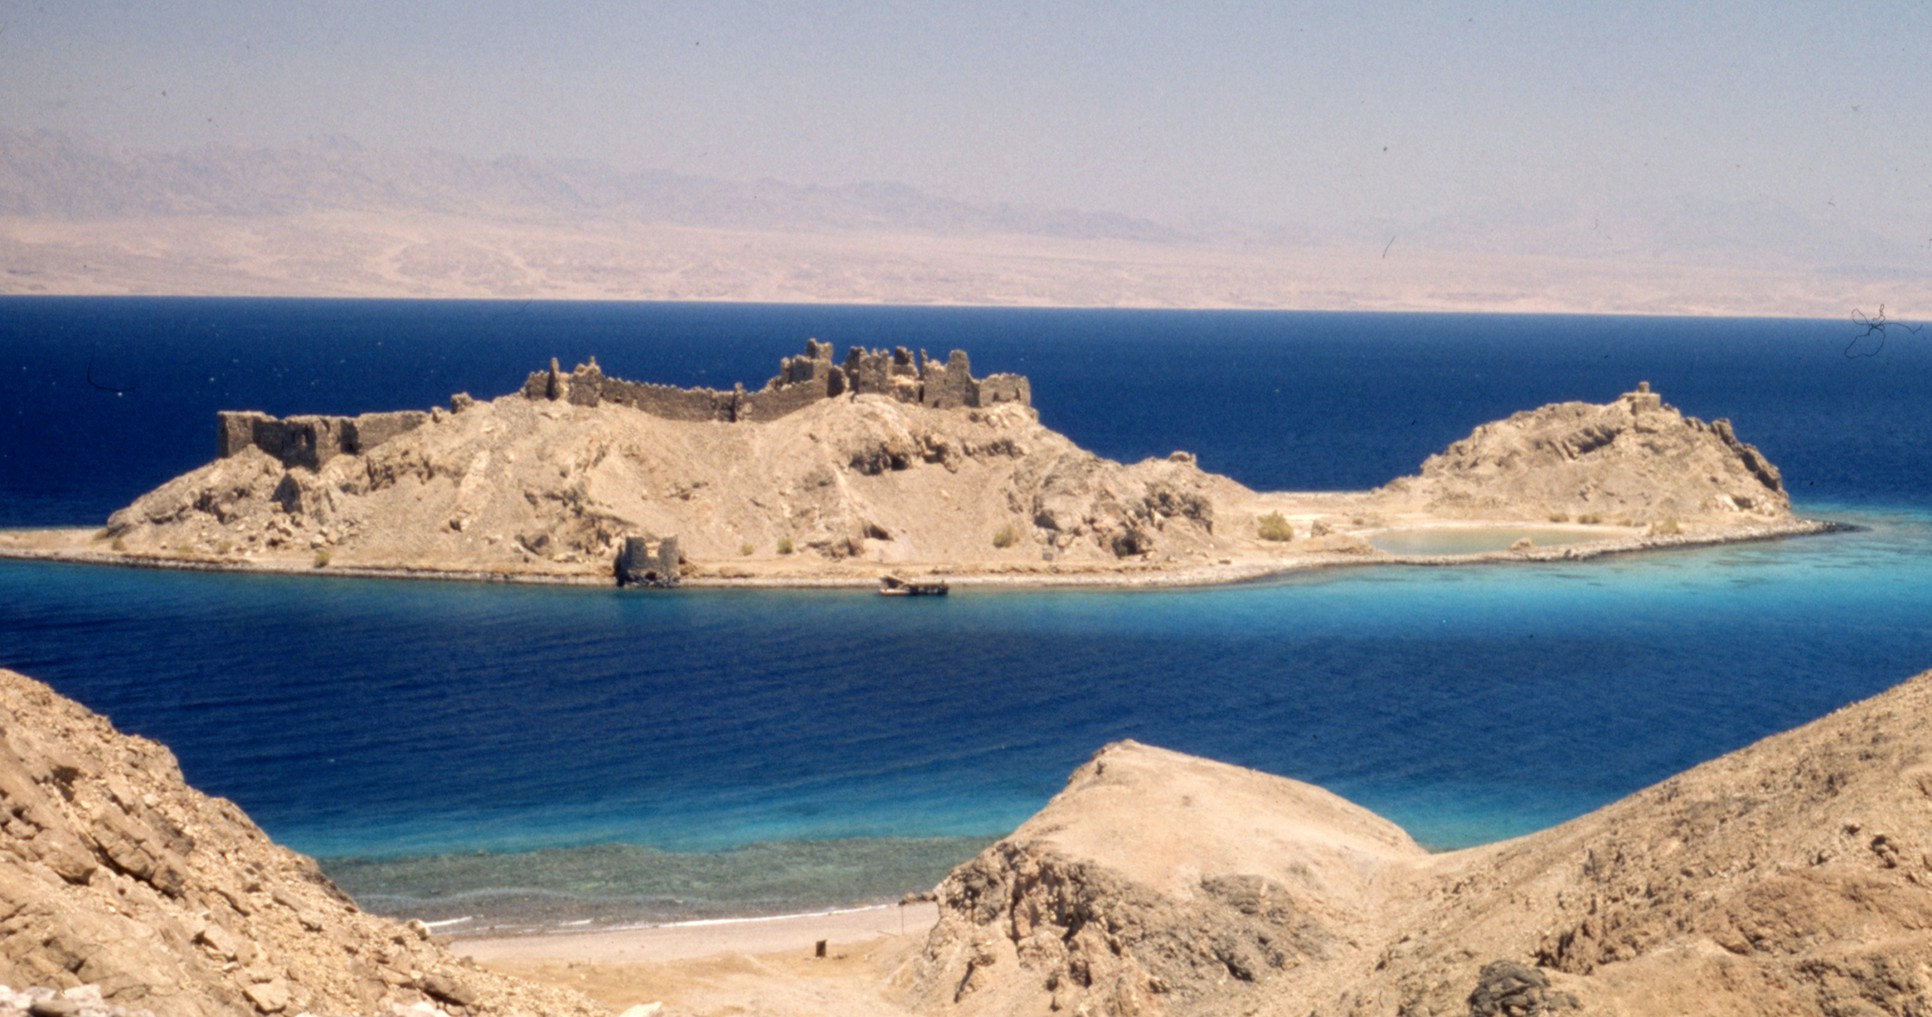 The Red Sea south of Eilat in Jordan.